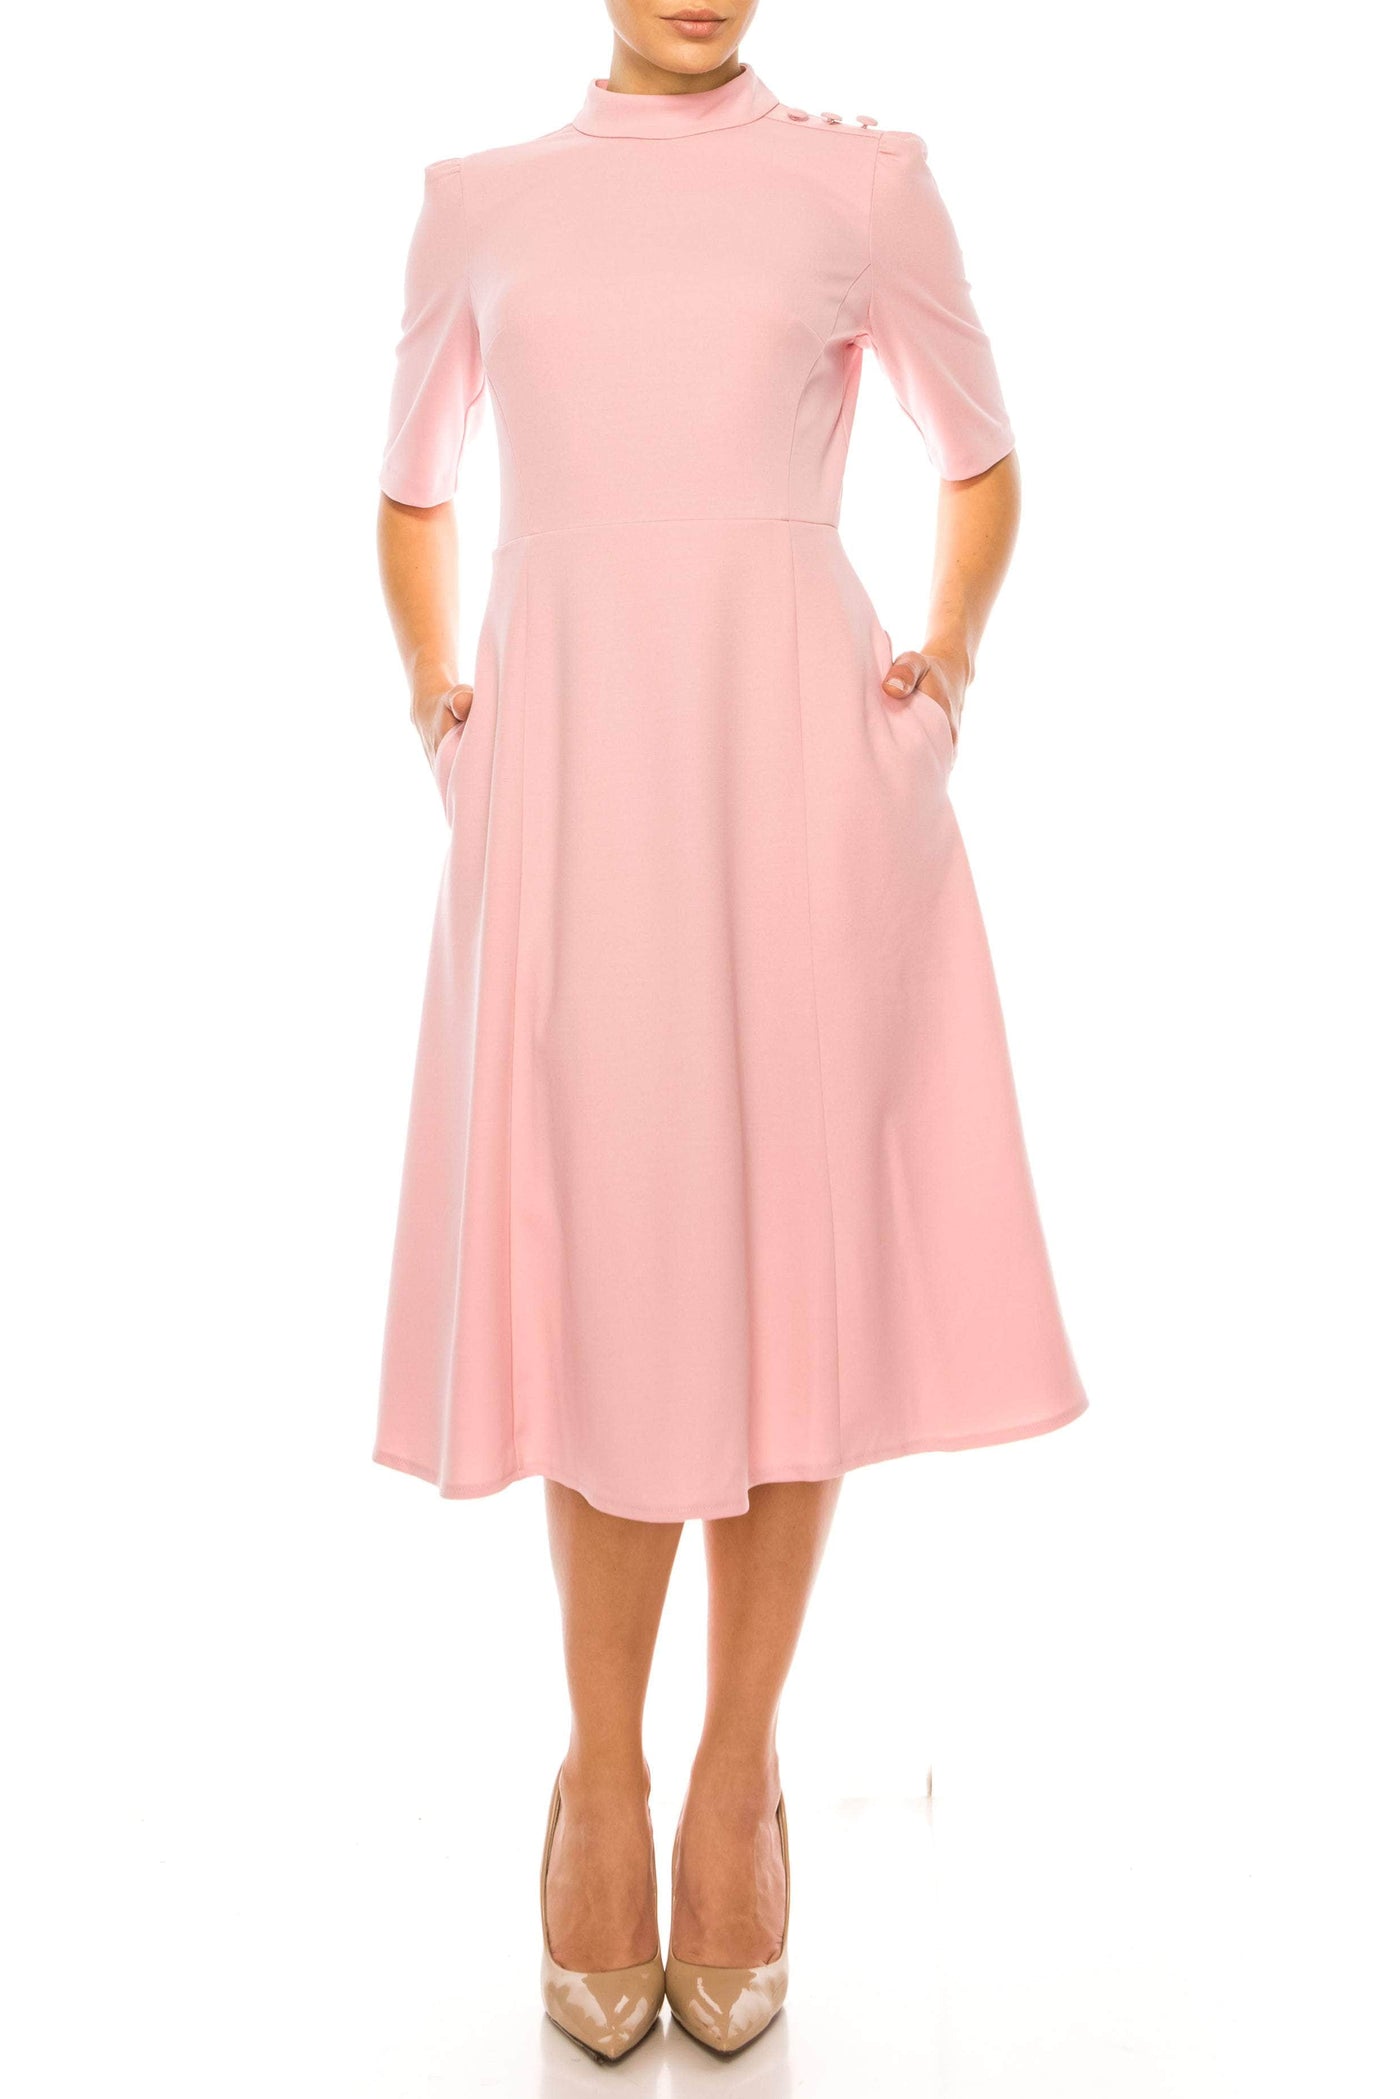 Donna Morgan D6953M - High Neck A-Line Dress Special Occasion Dresses